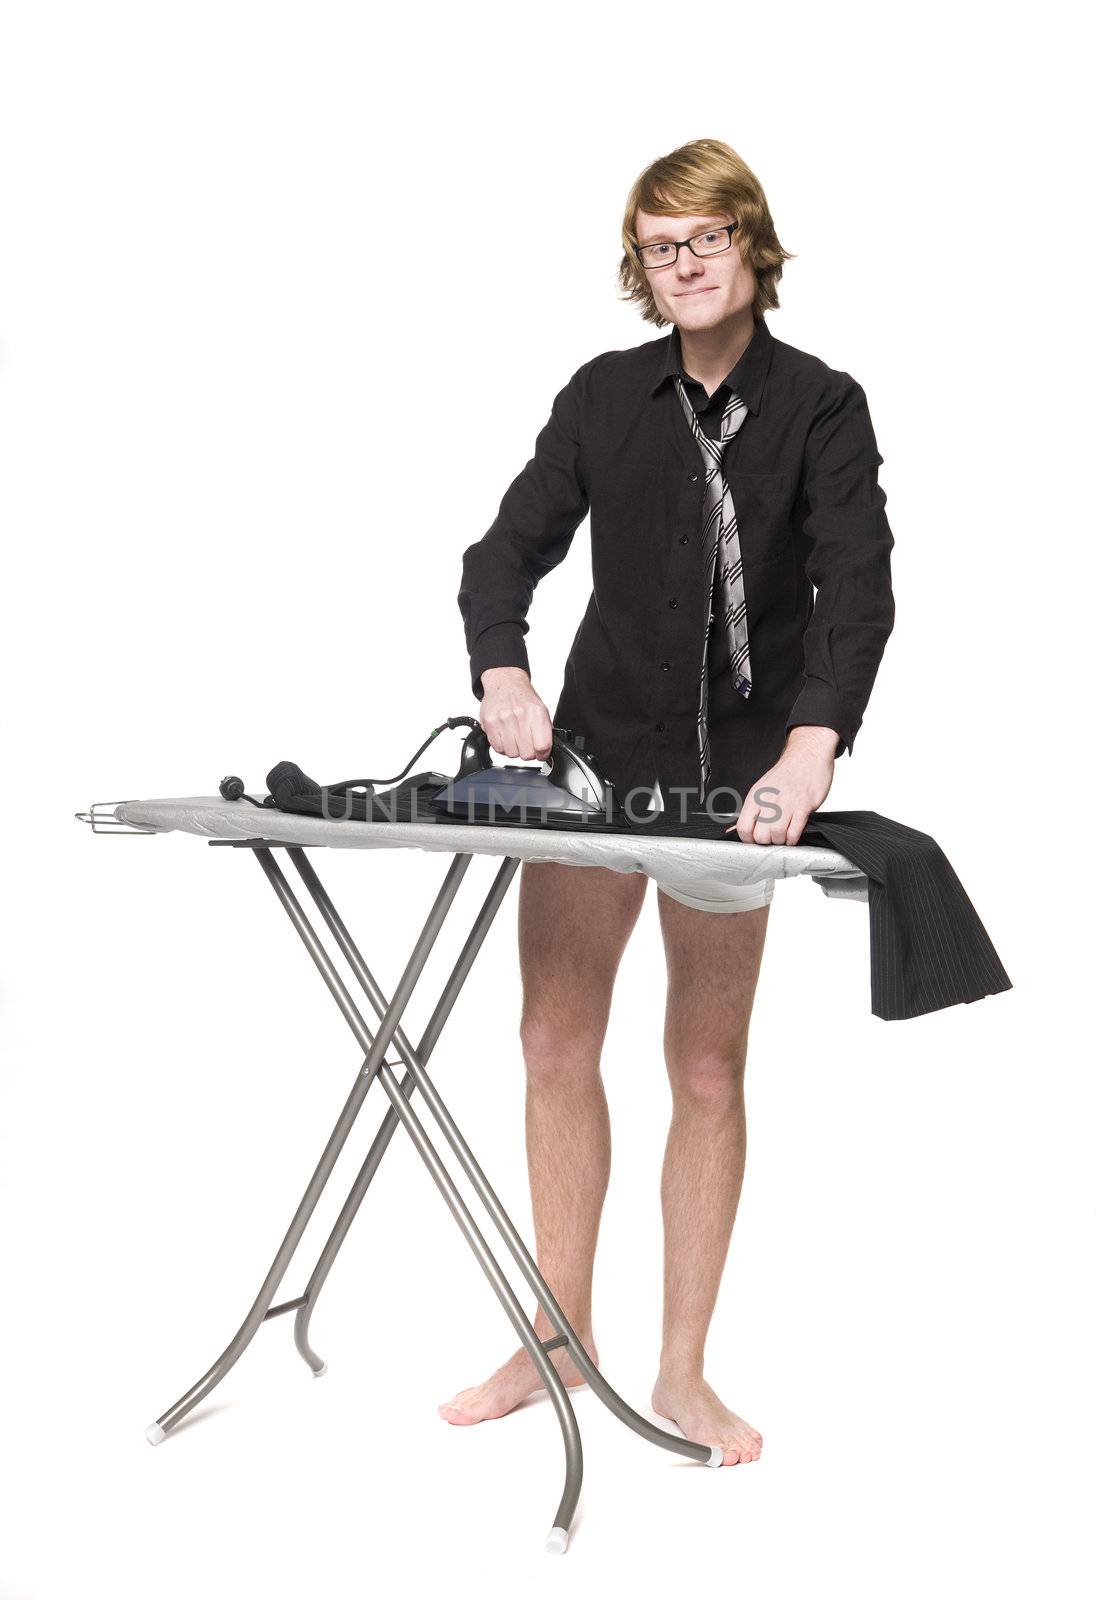 Man ironing his pants by gemenacom